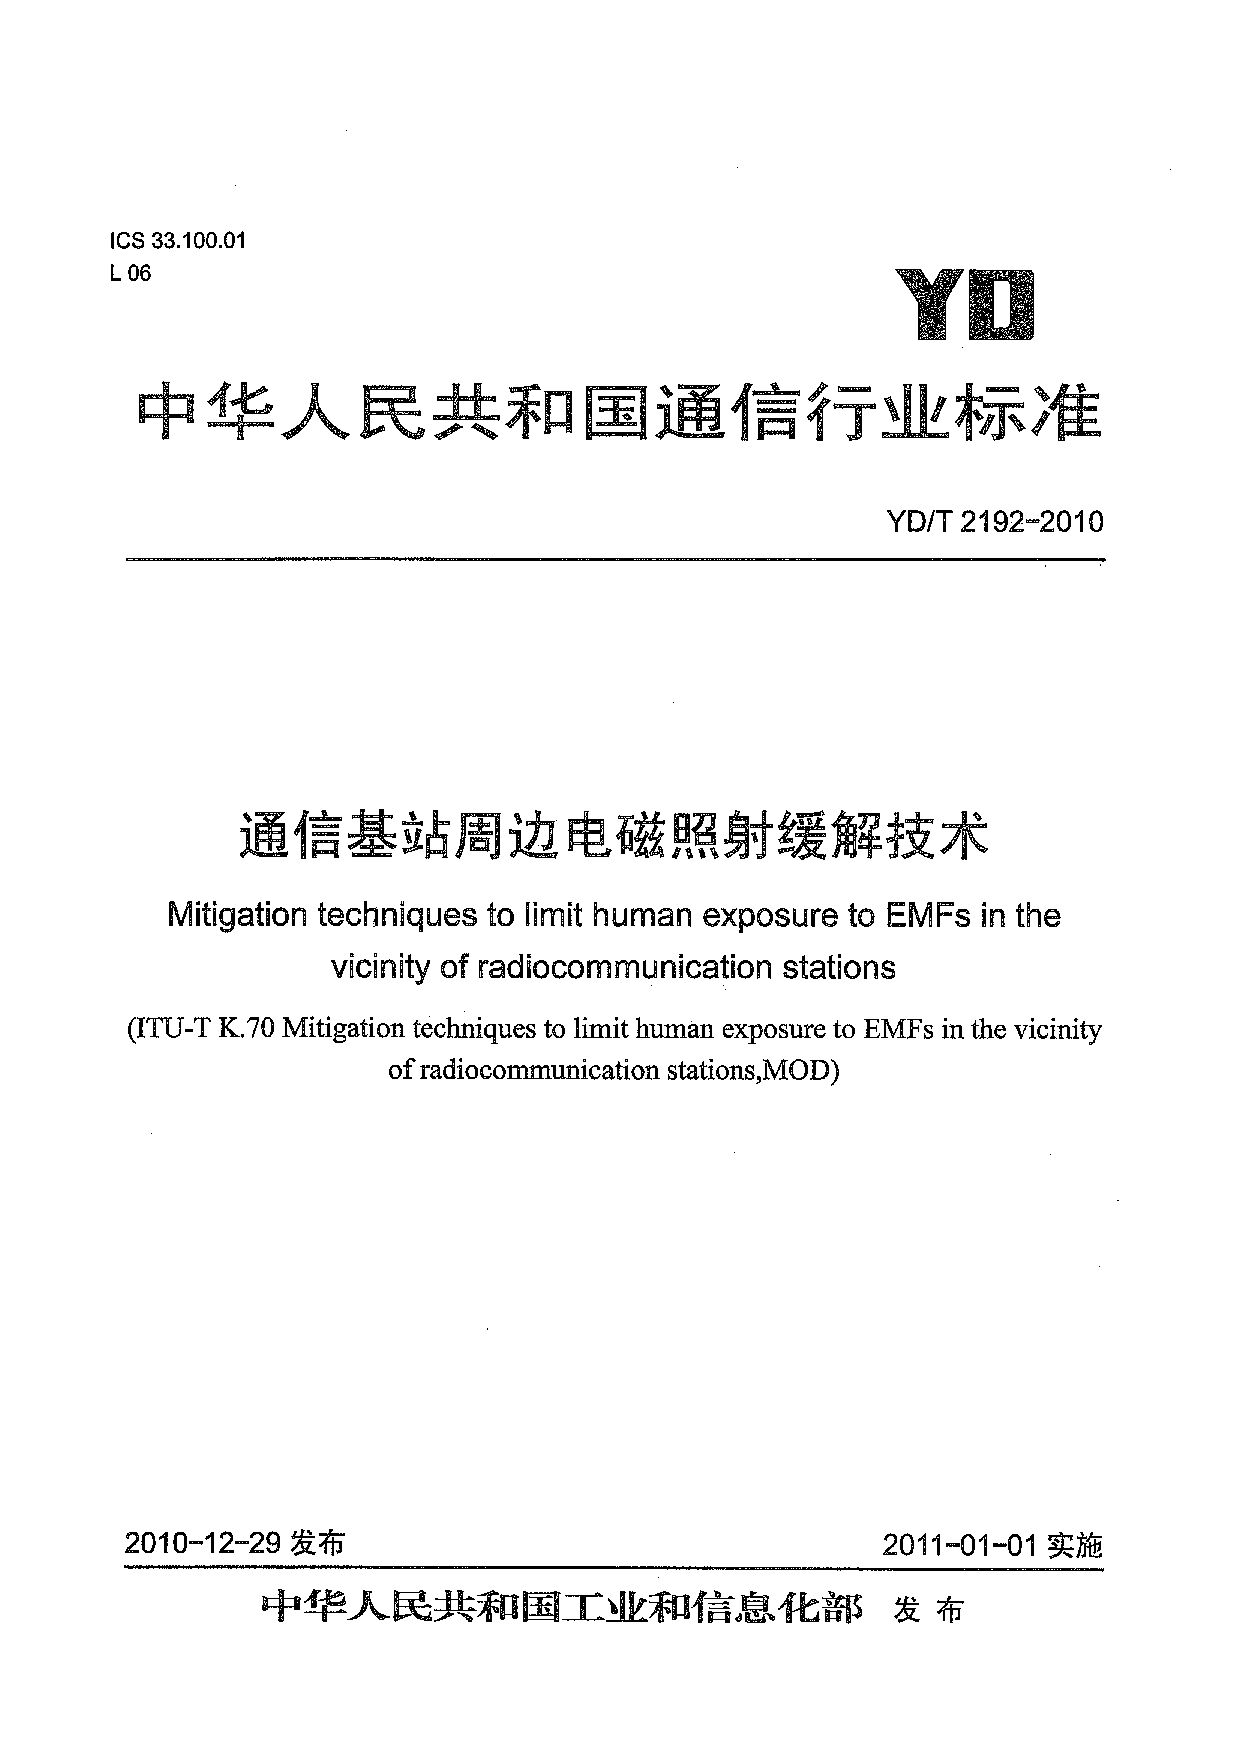 YD/T 2192-2010封面图